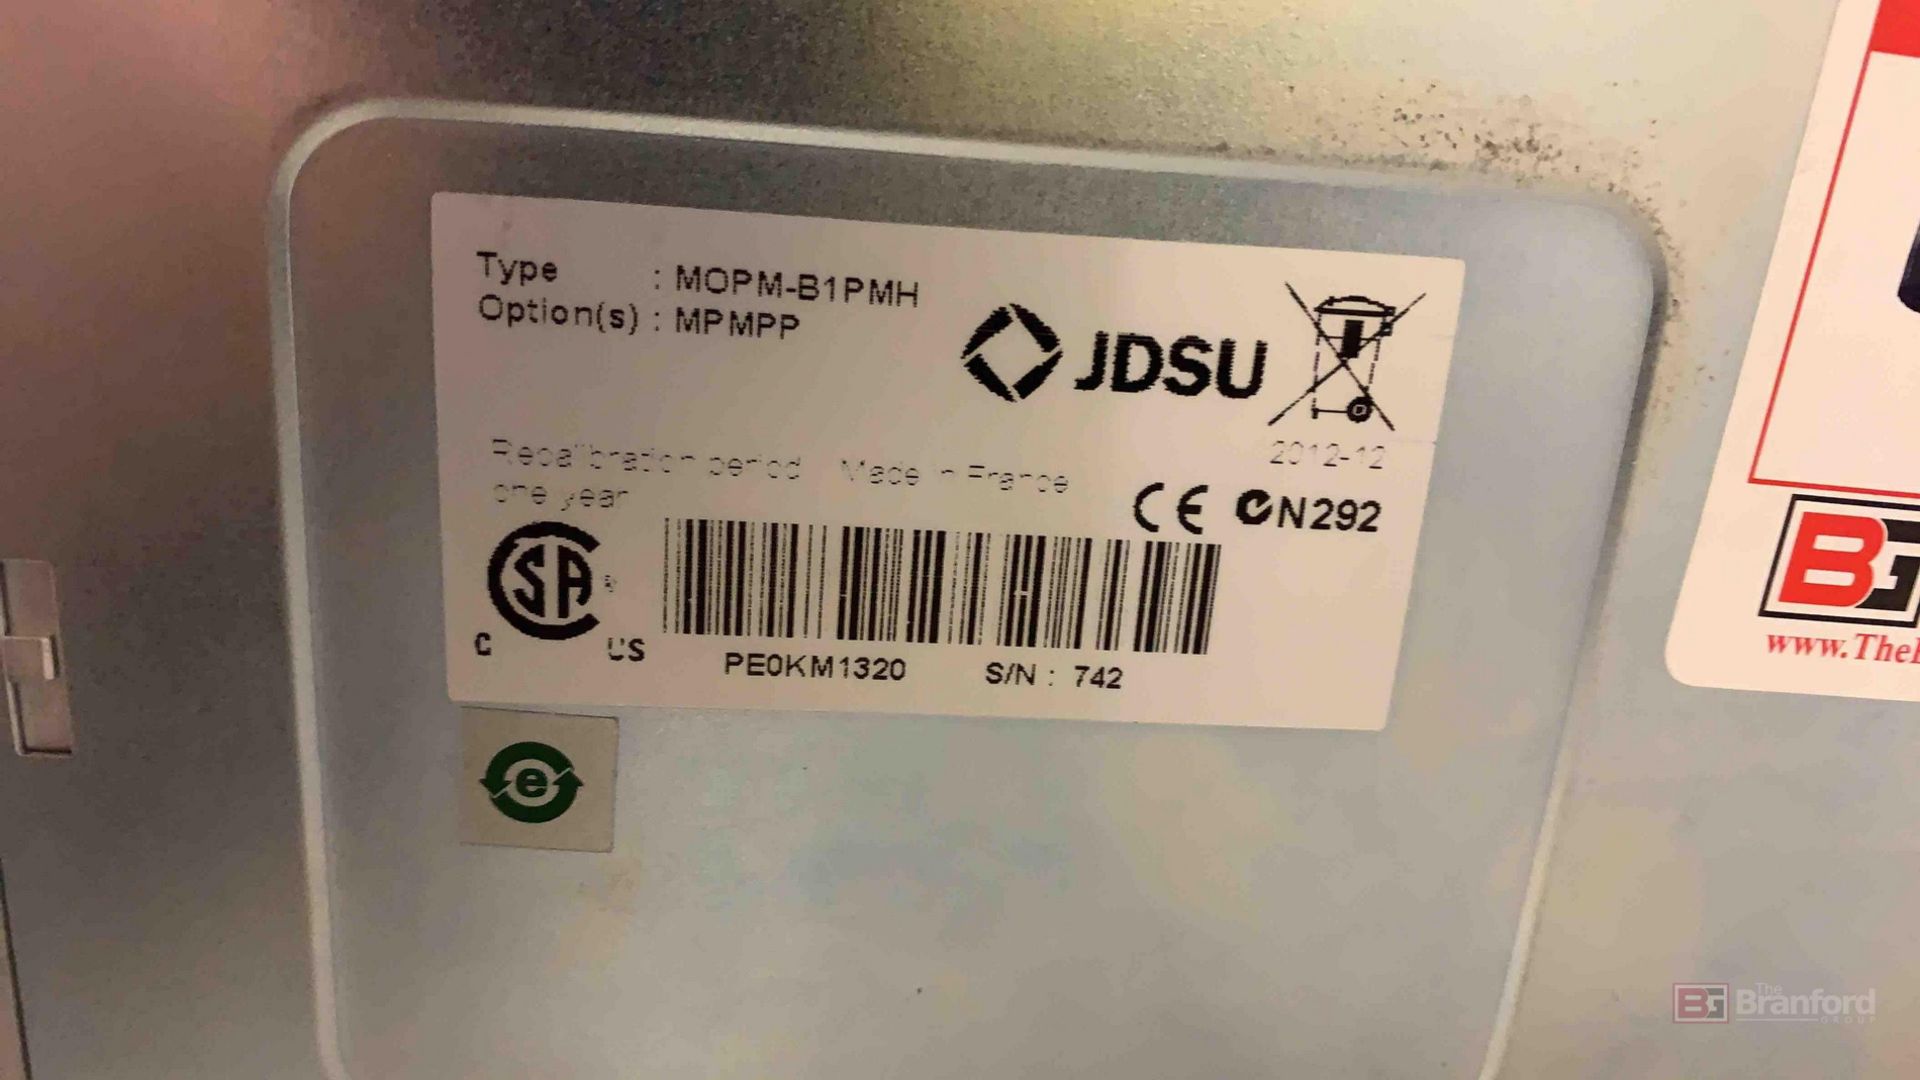 JDSU mOPM-B1 power meter - Image 3 of 3